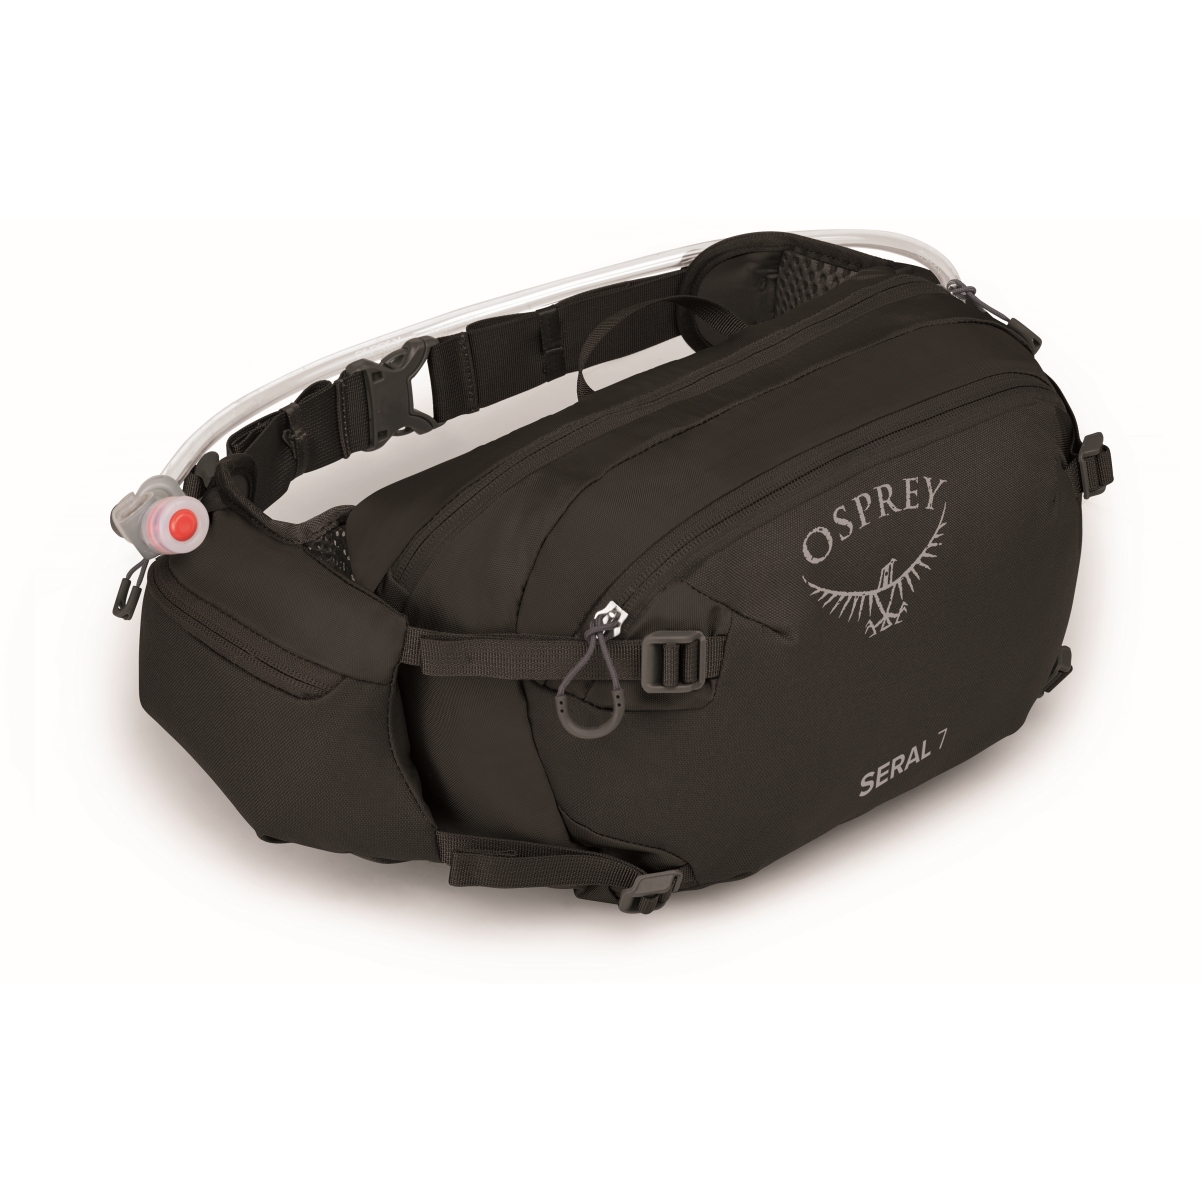 Image of Osprey Seral 7 Waist Pack + Hydration Bladder - Black